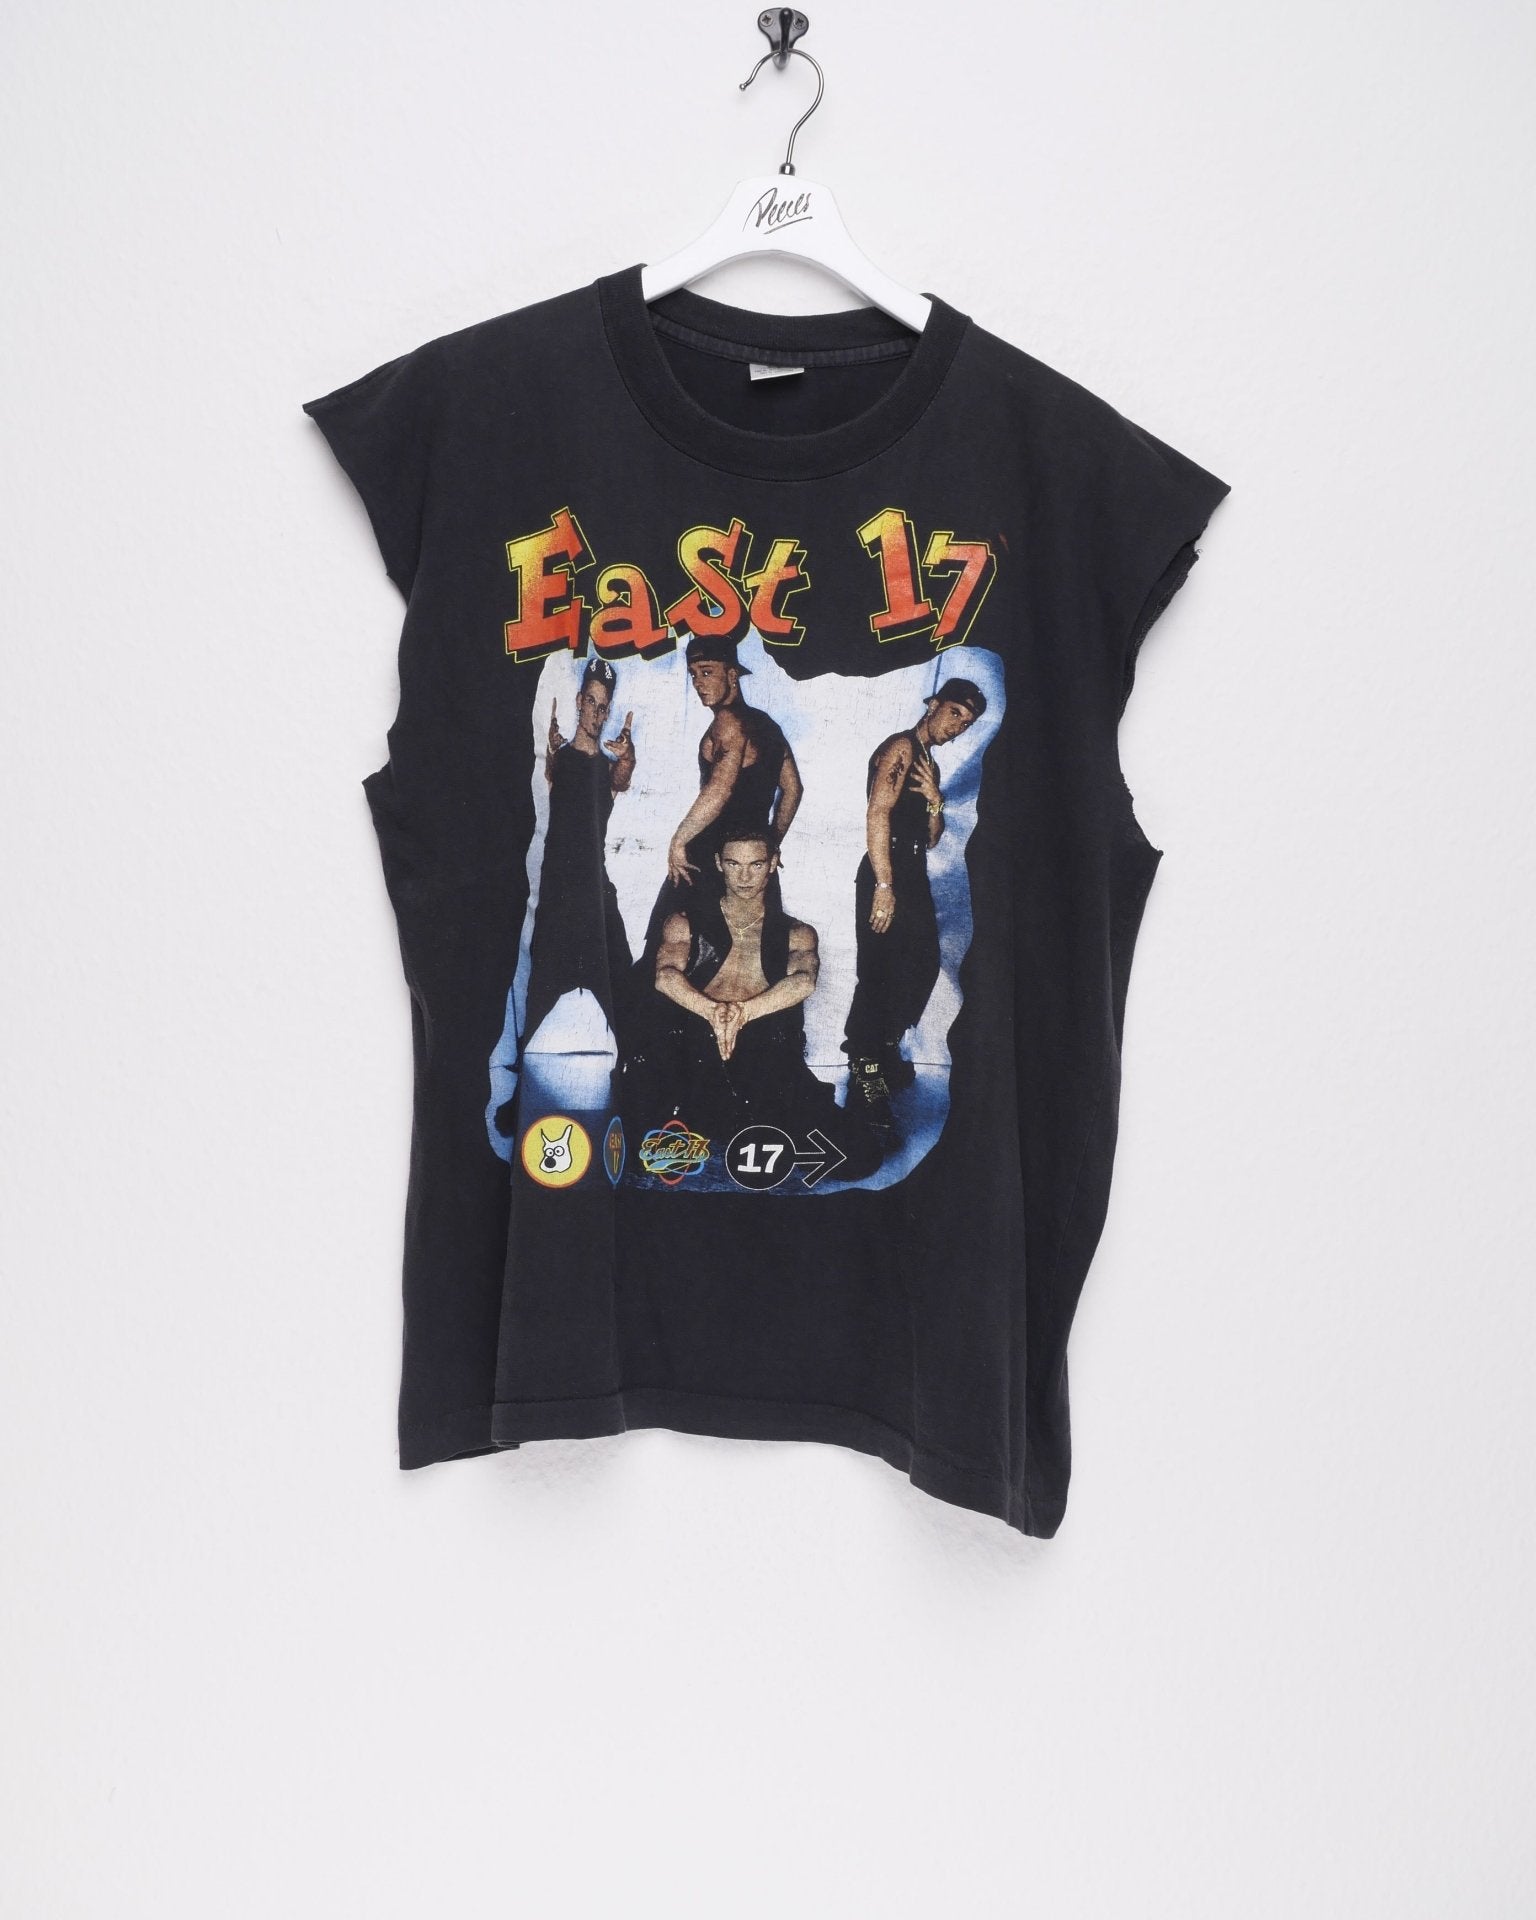 'East 17' printed Graphic black Tank top Shirt - Peeces